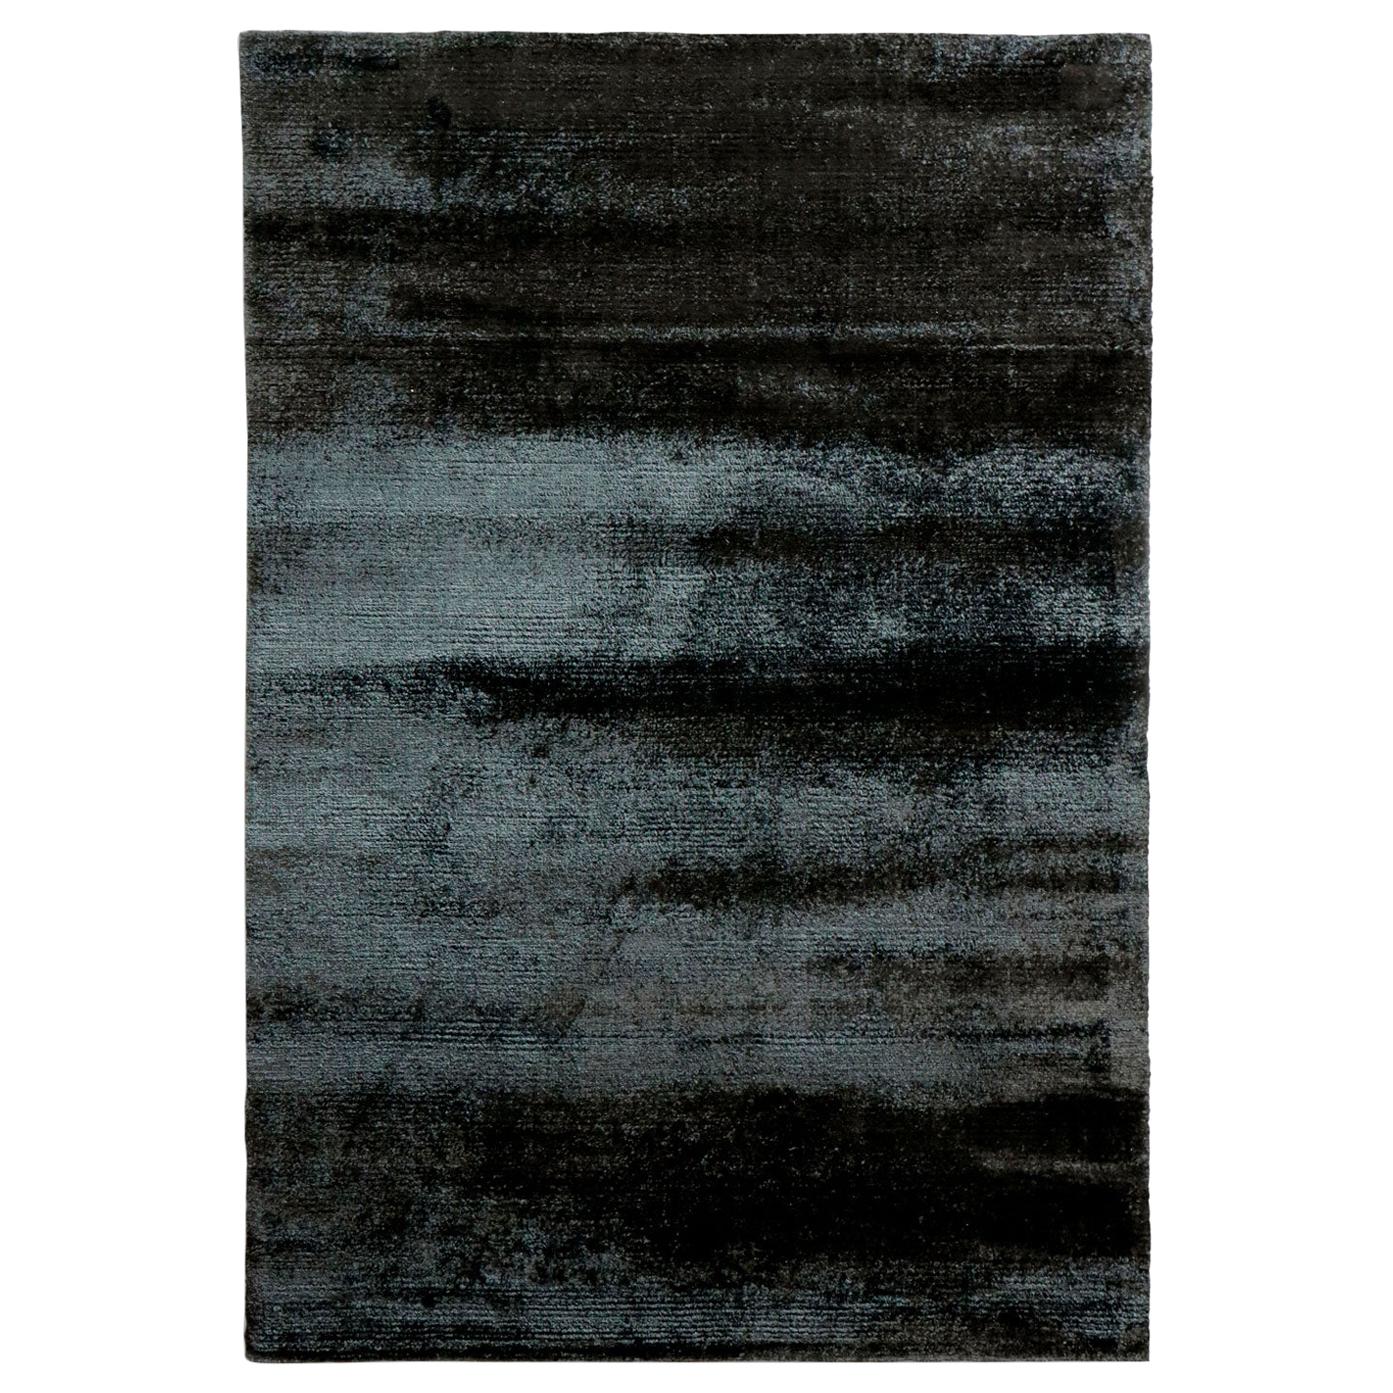 Contemporary Shiny Black Viscose Rug by Deanna Comelllini In Stock 200x300 cm